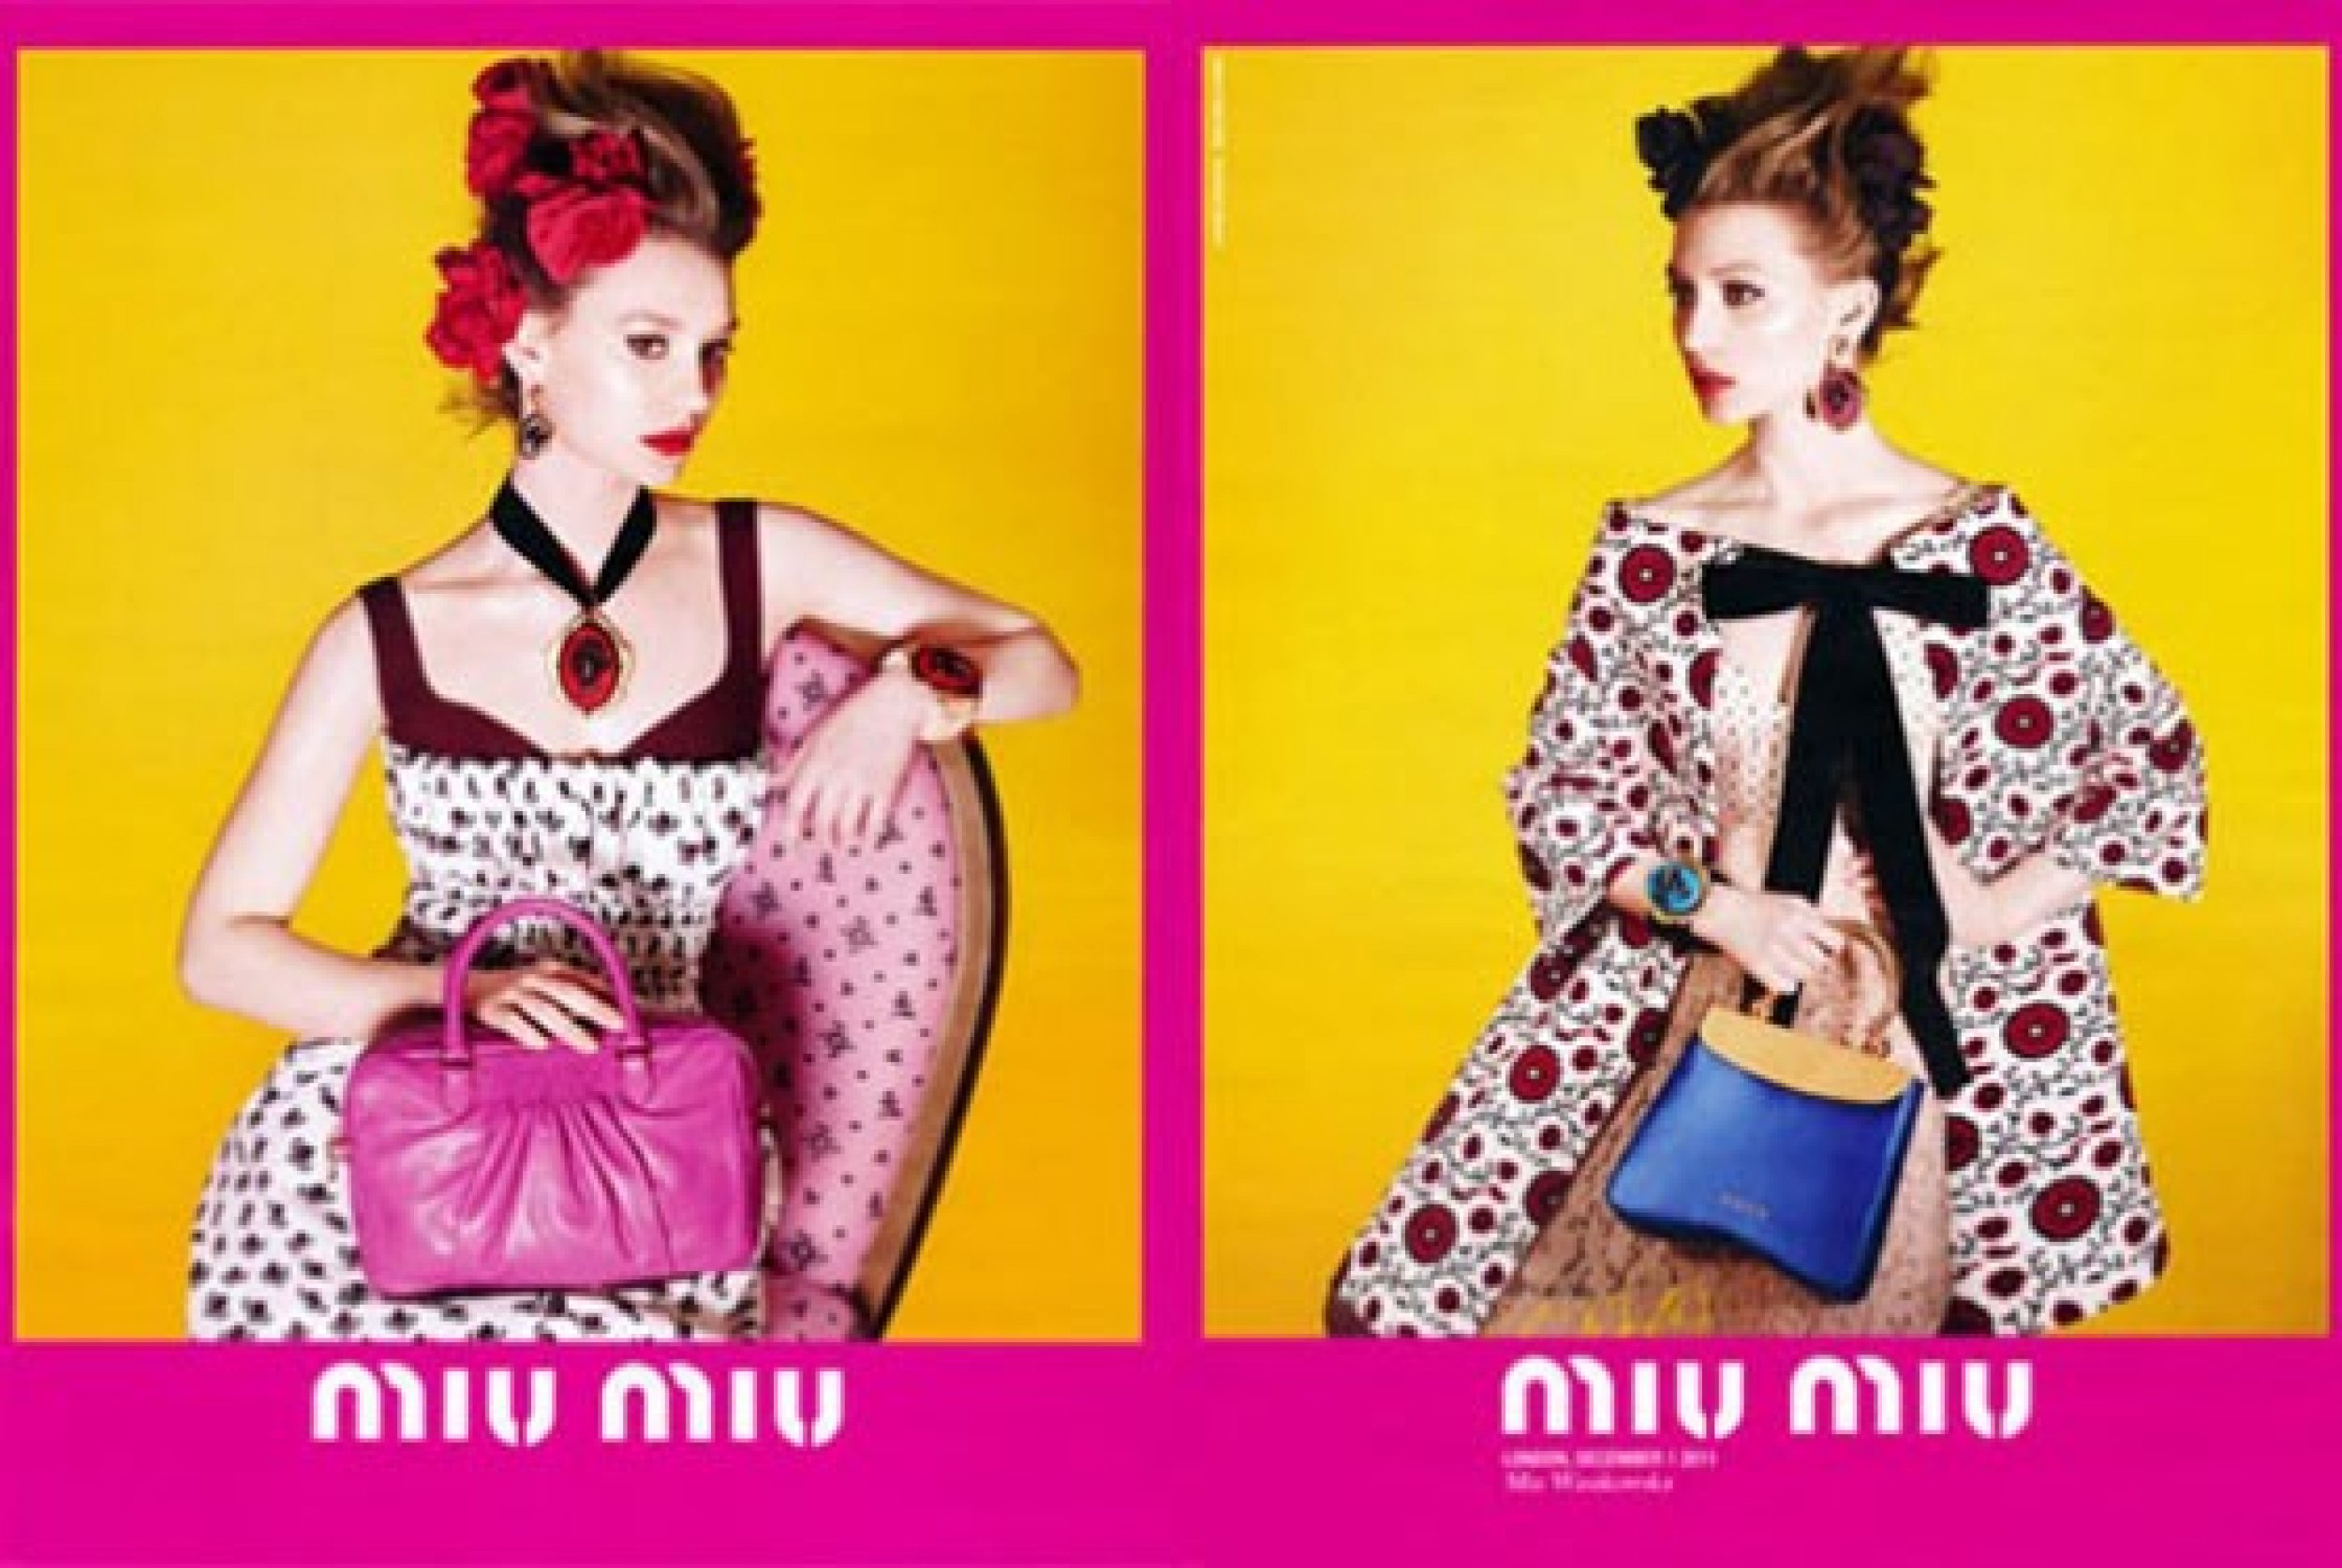 Mia Wasikowska is the New Face of Miu Mius SpringSummer 2012 Campaign 